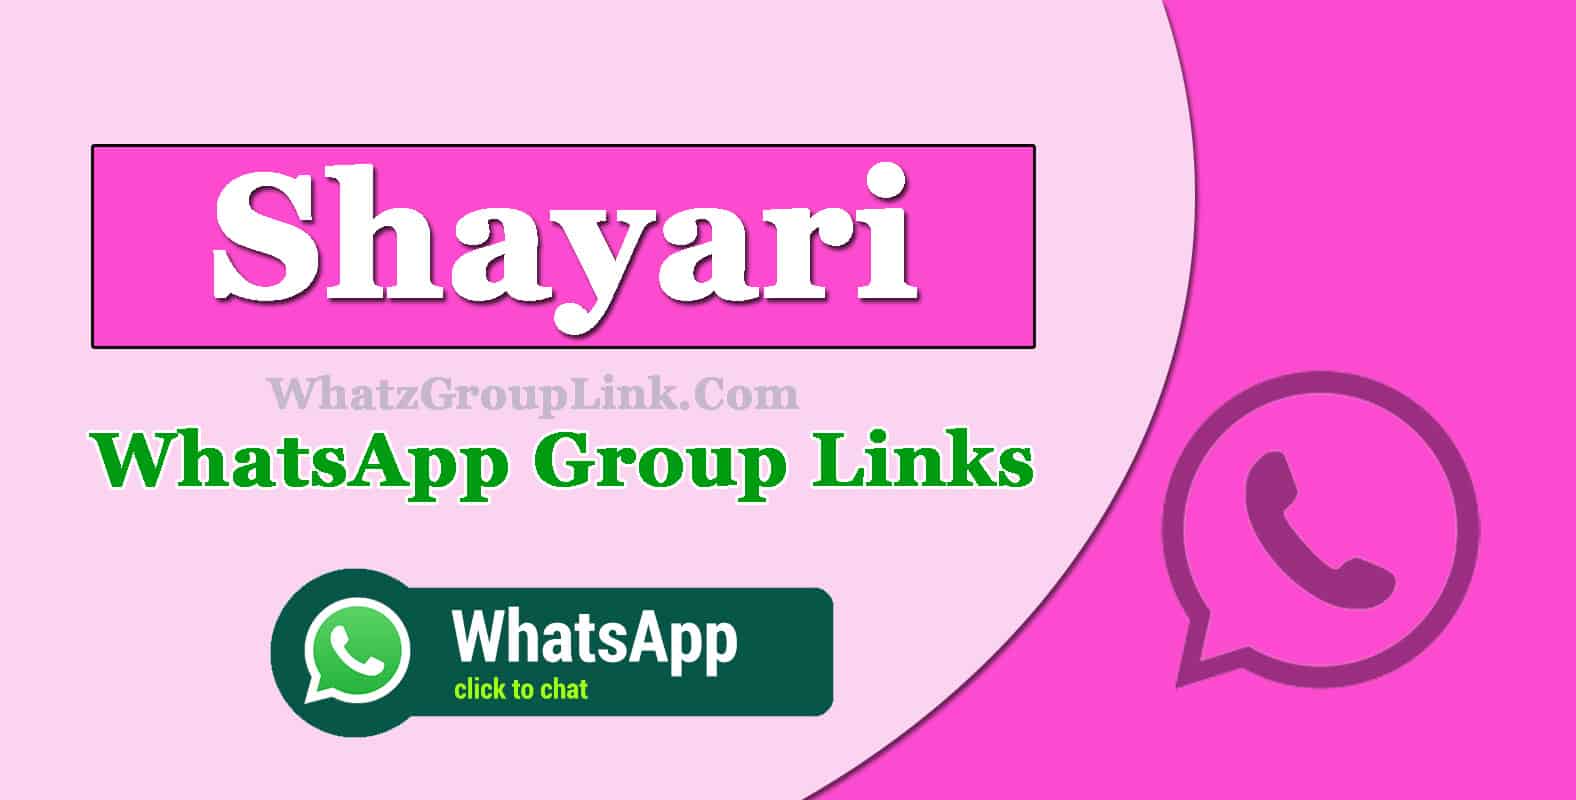 Shayari WhatsApp Group Join Link